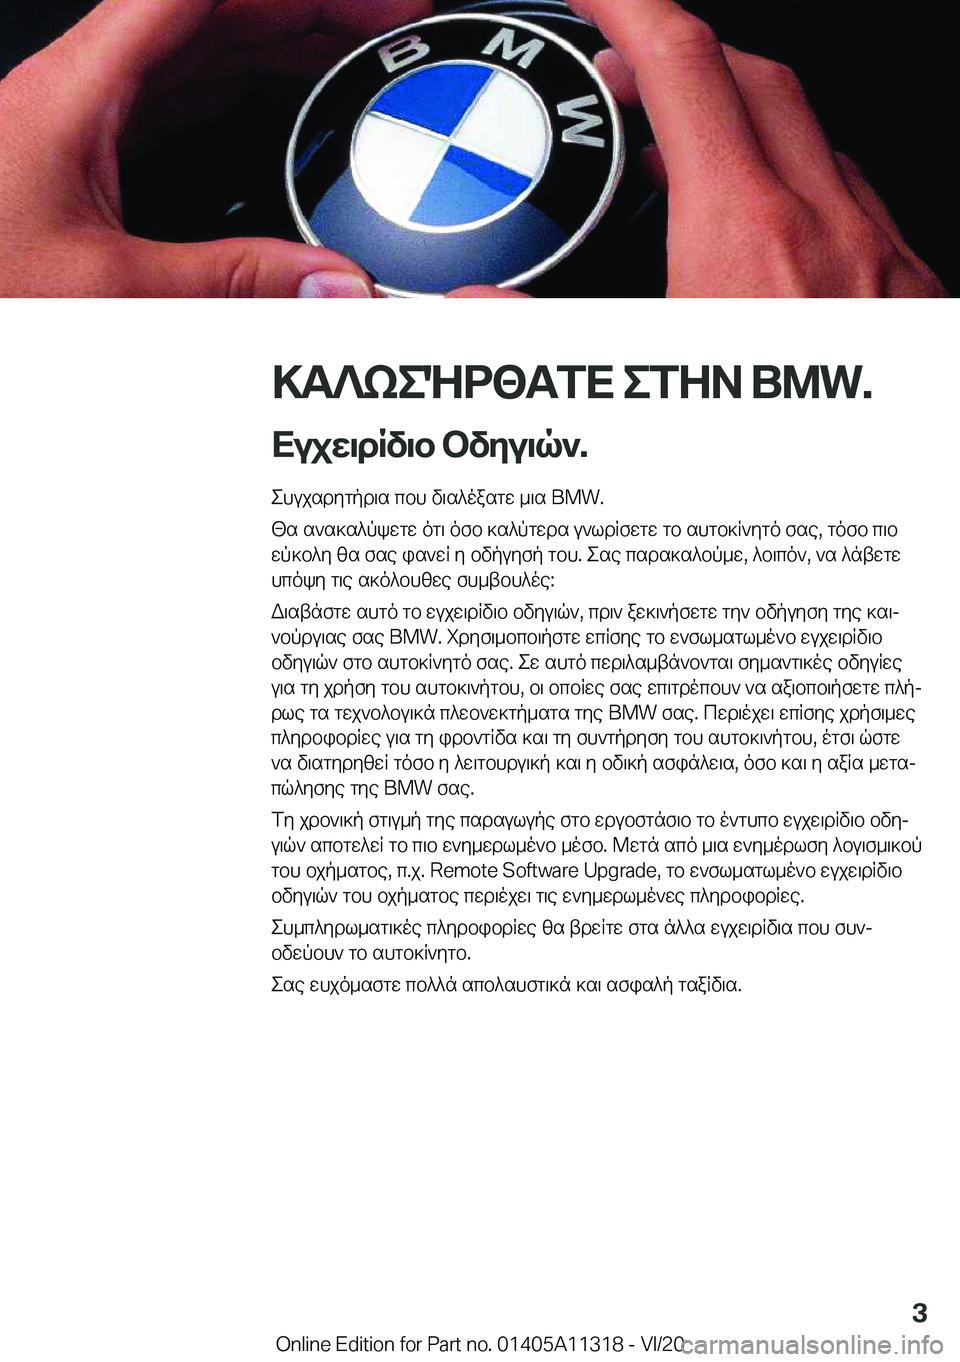 BMW 5 SERIES 2021  ΟΔΗΓΌΣ ΧΡΉΣΗΣ (in Greek) >T?keNd<TfX�efZA��B�M�W�.
Xujw\dRv\b�bvyu\q`�. ehujsdygpd\s�cbh�v\s^oasgw�_\s��B�M�W�.
[s�s`s]s^pkwgw�og\�ofb�